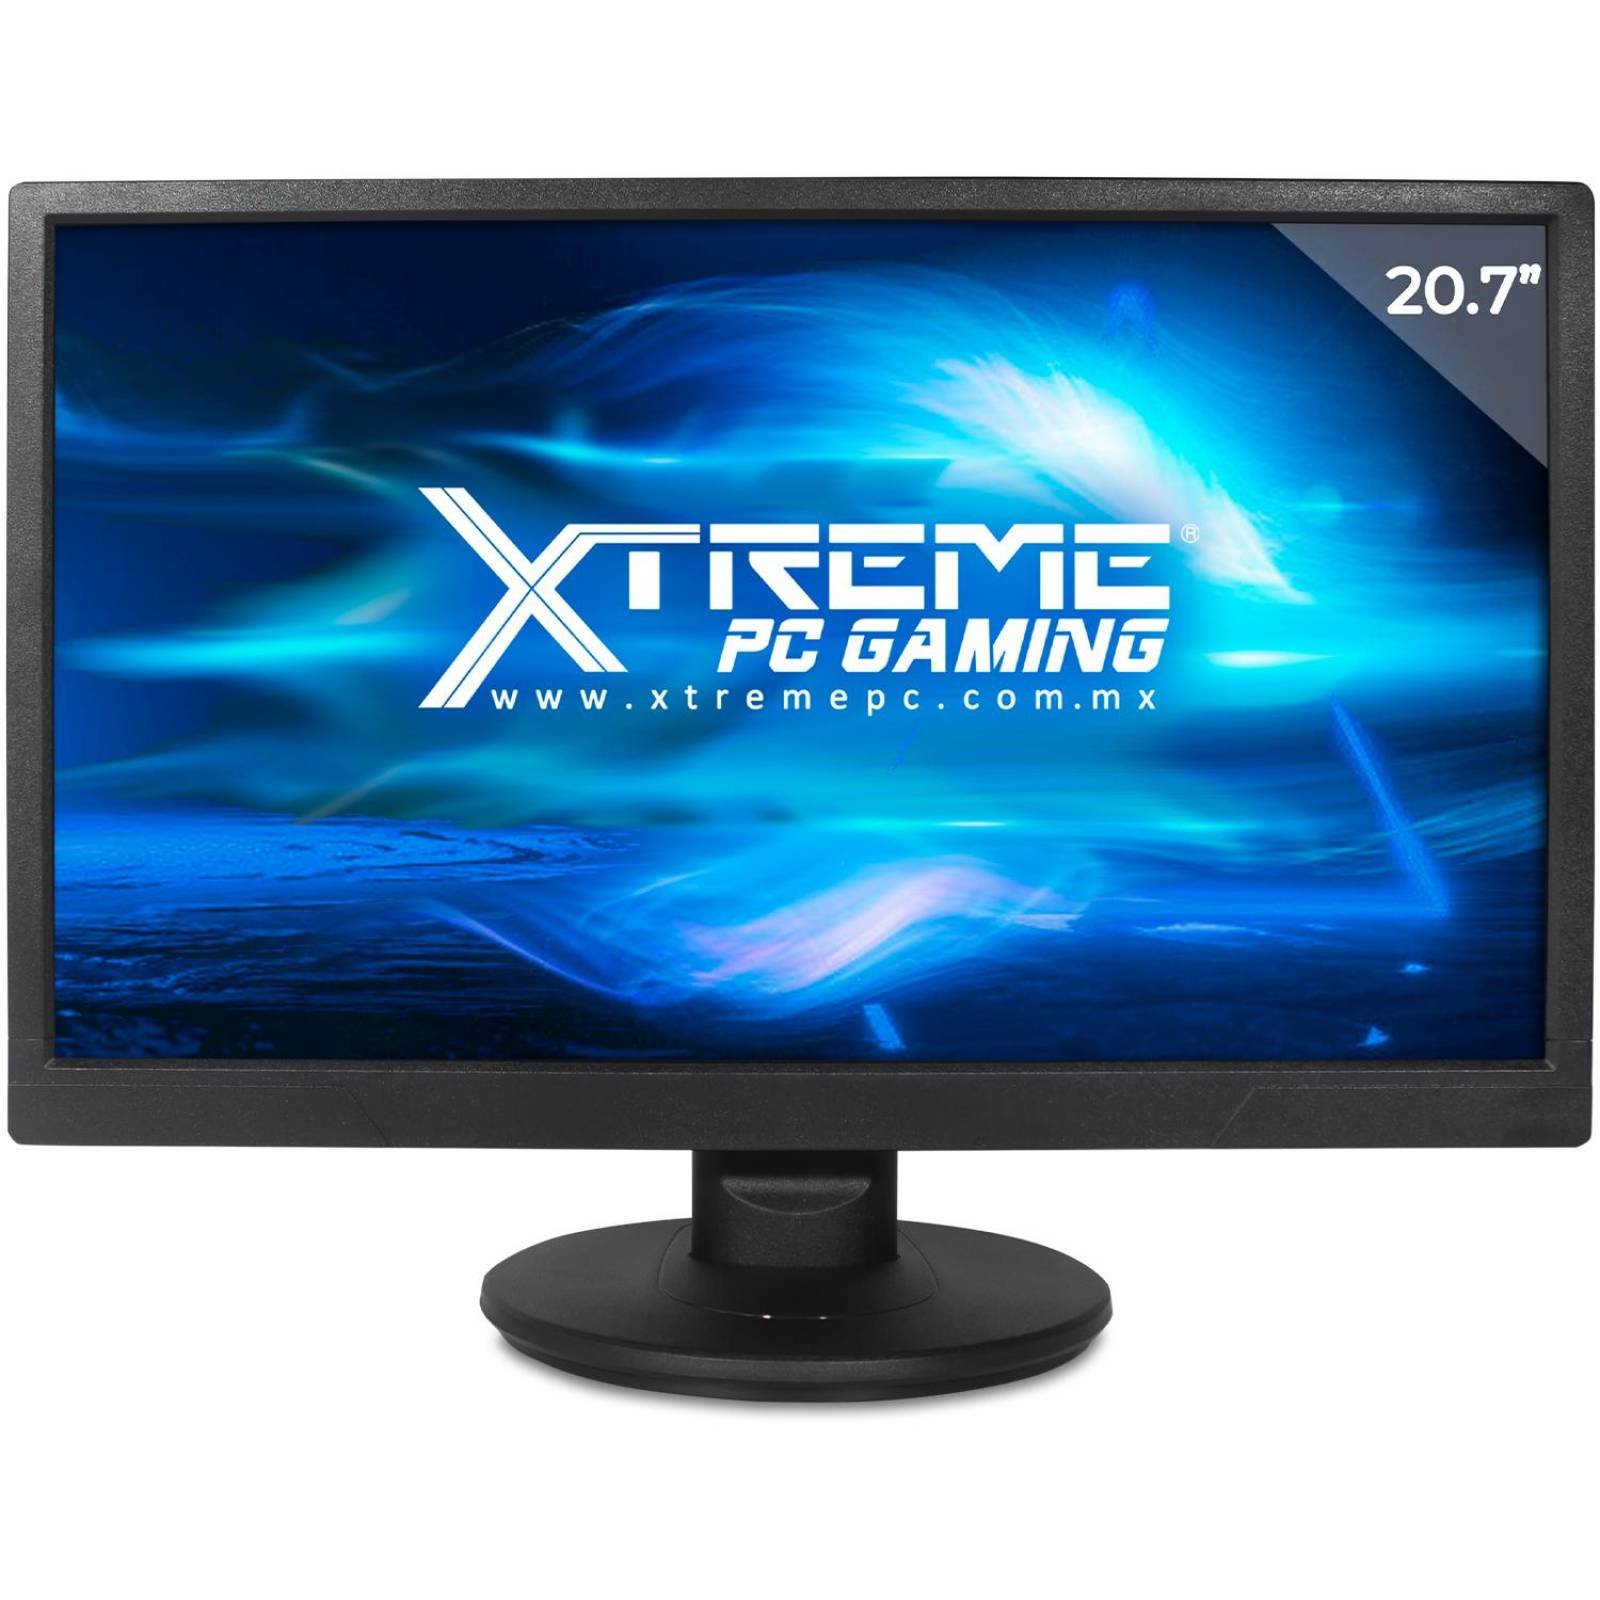 Xtreme PC Gamer AMD Radeon R5 A10 9630P 8GB 1TB Monitor 20.7 WIFI 